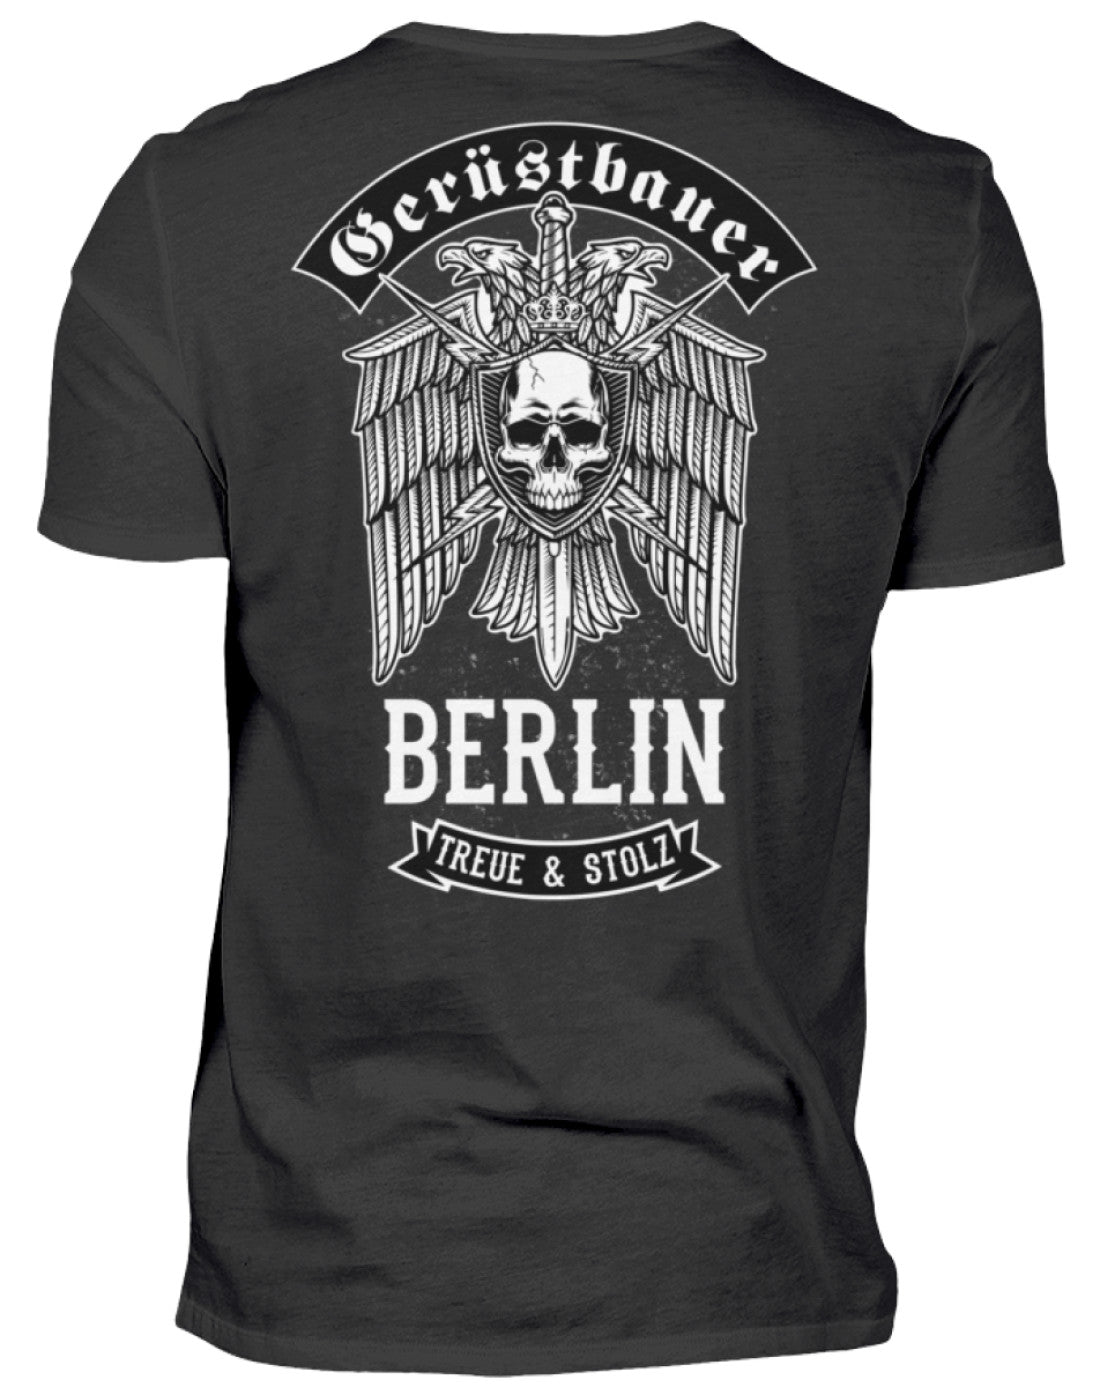 Gerüstbauer Shirt Berlin  - Herren Shirt €22.95 Gerüstbauer - Shop >>